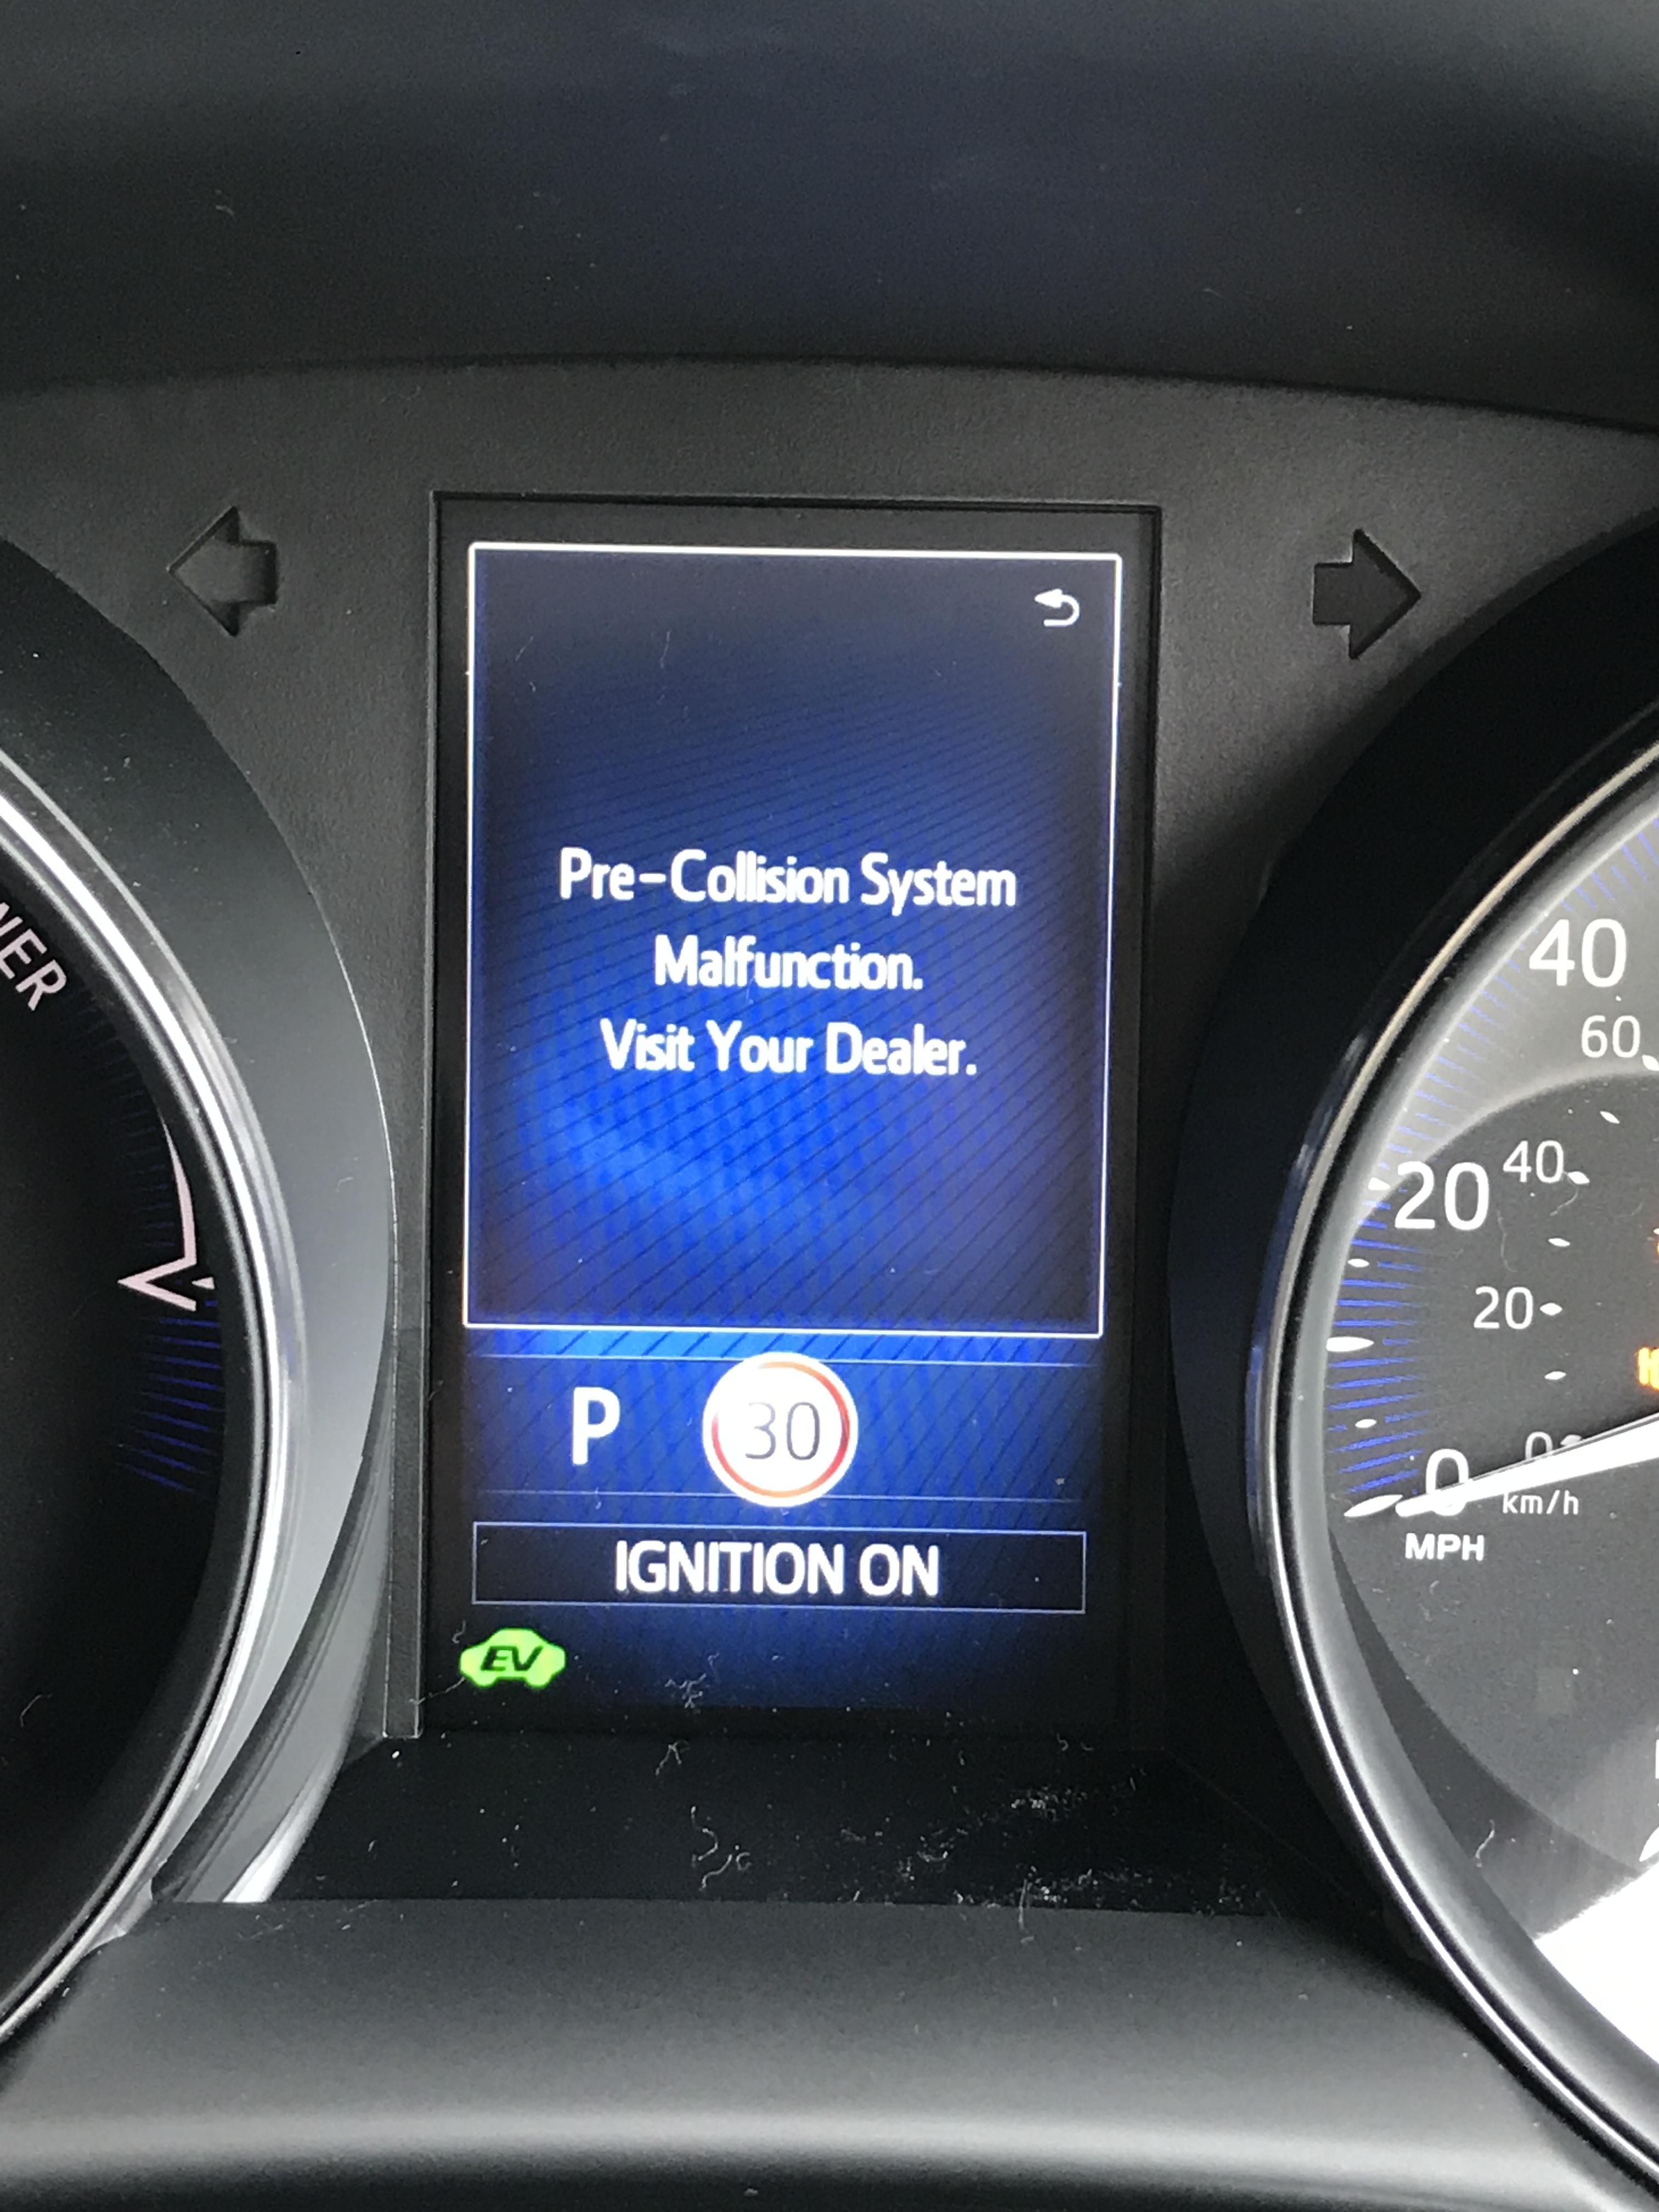 2017 Toyota Corolla Pre Collision System Malfunction